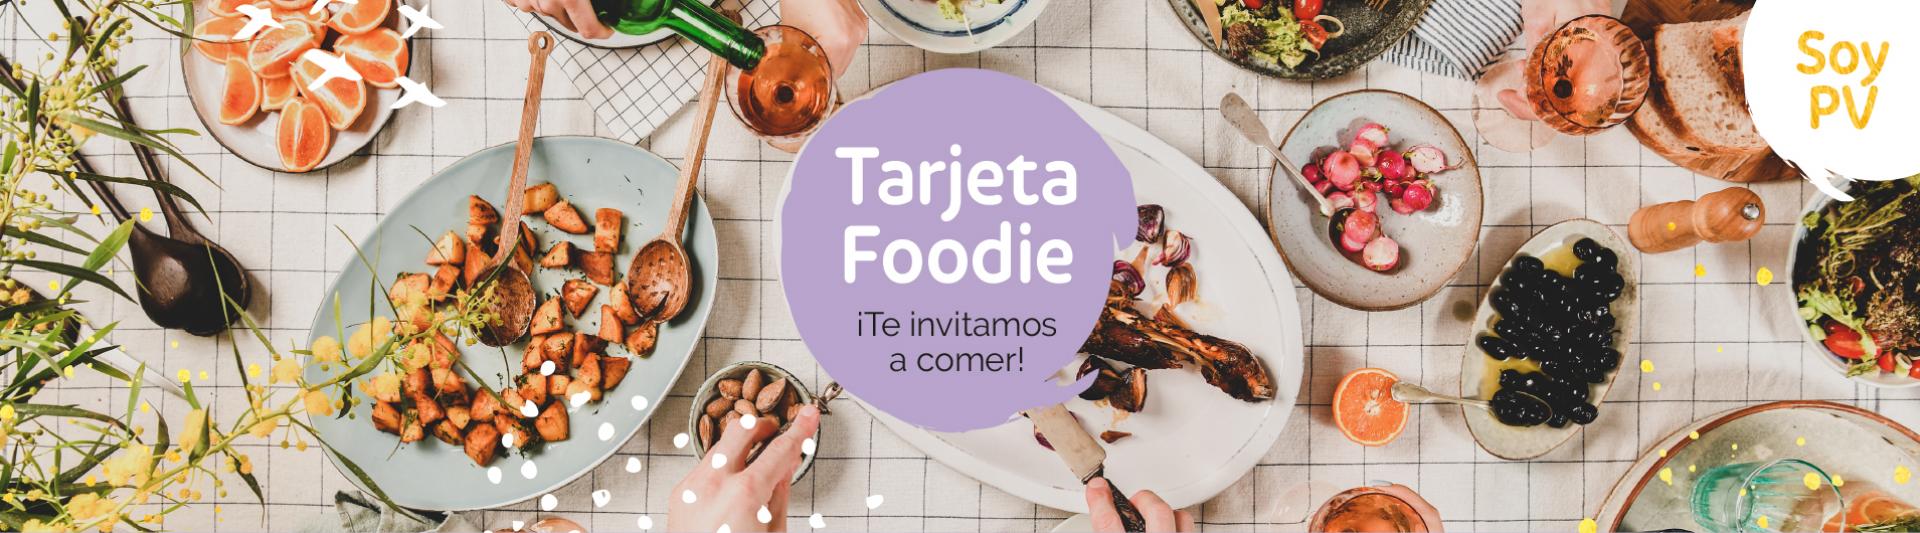 tarjeta foodie love